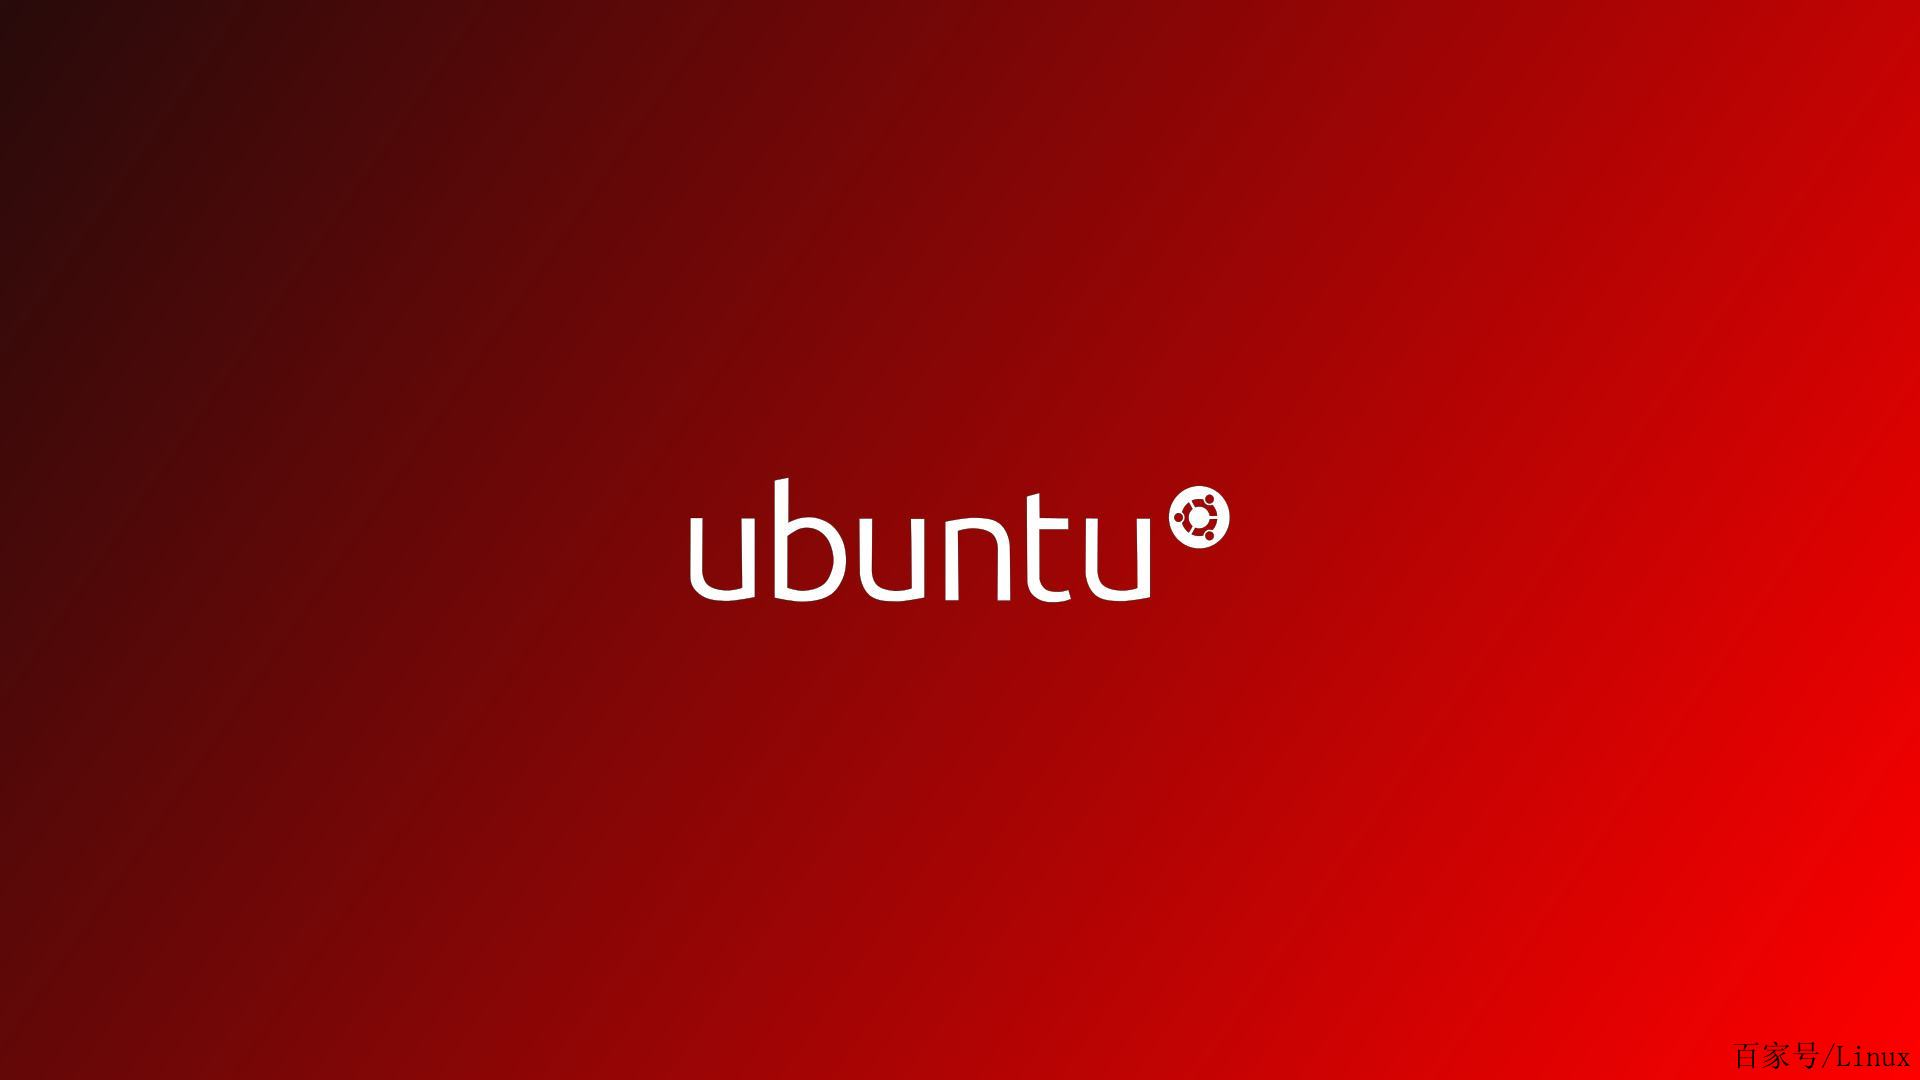 ftp access denied to remote  resource | ubuntu文件夹权限修改失败 问题解决